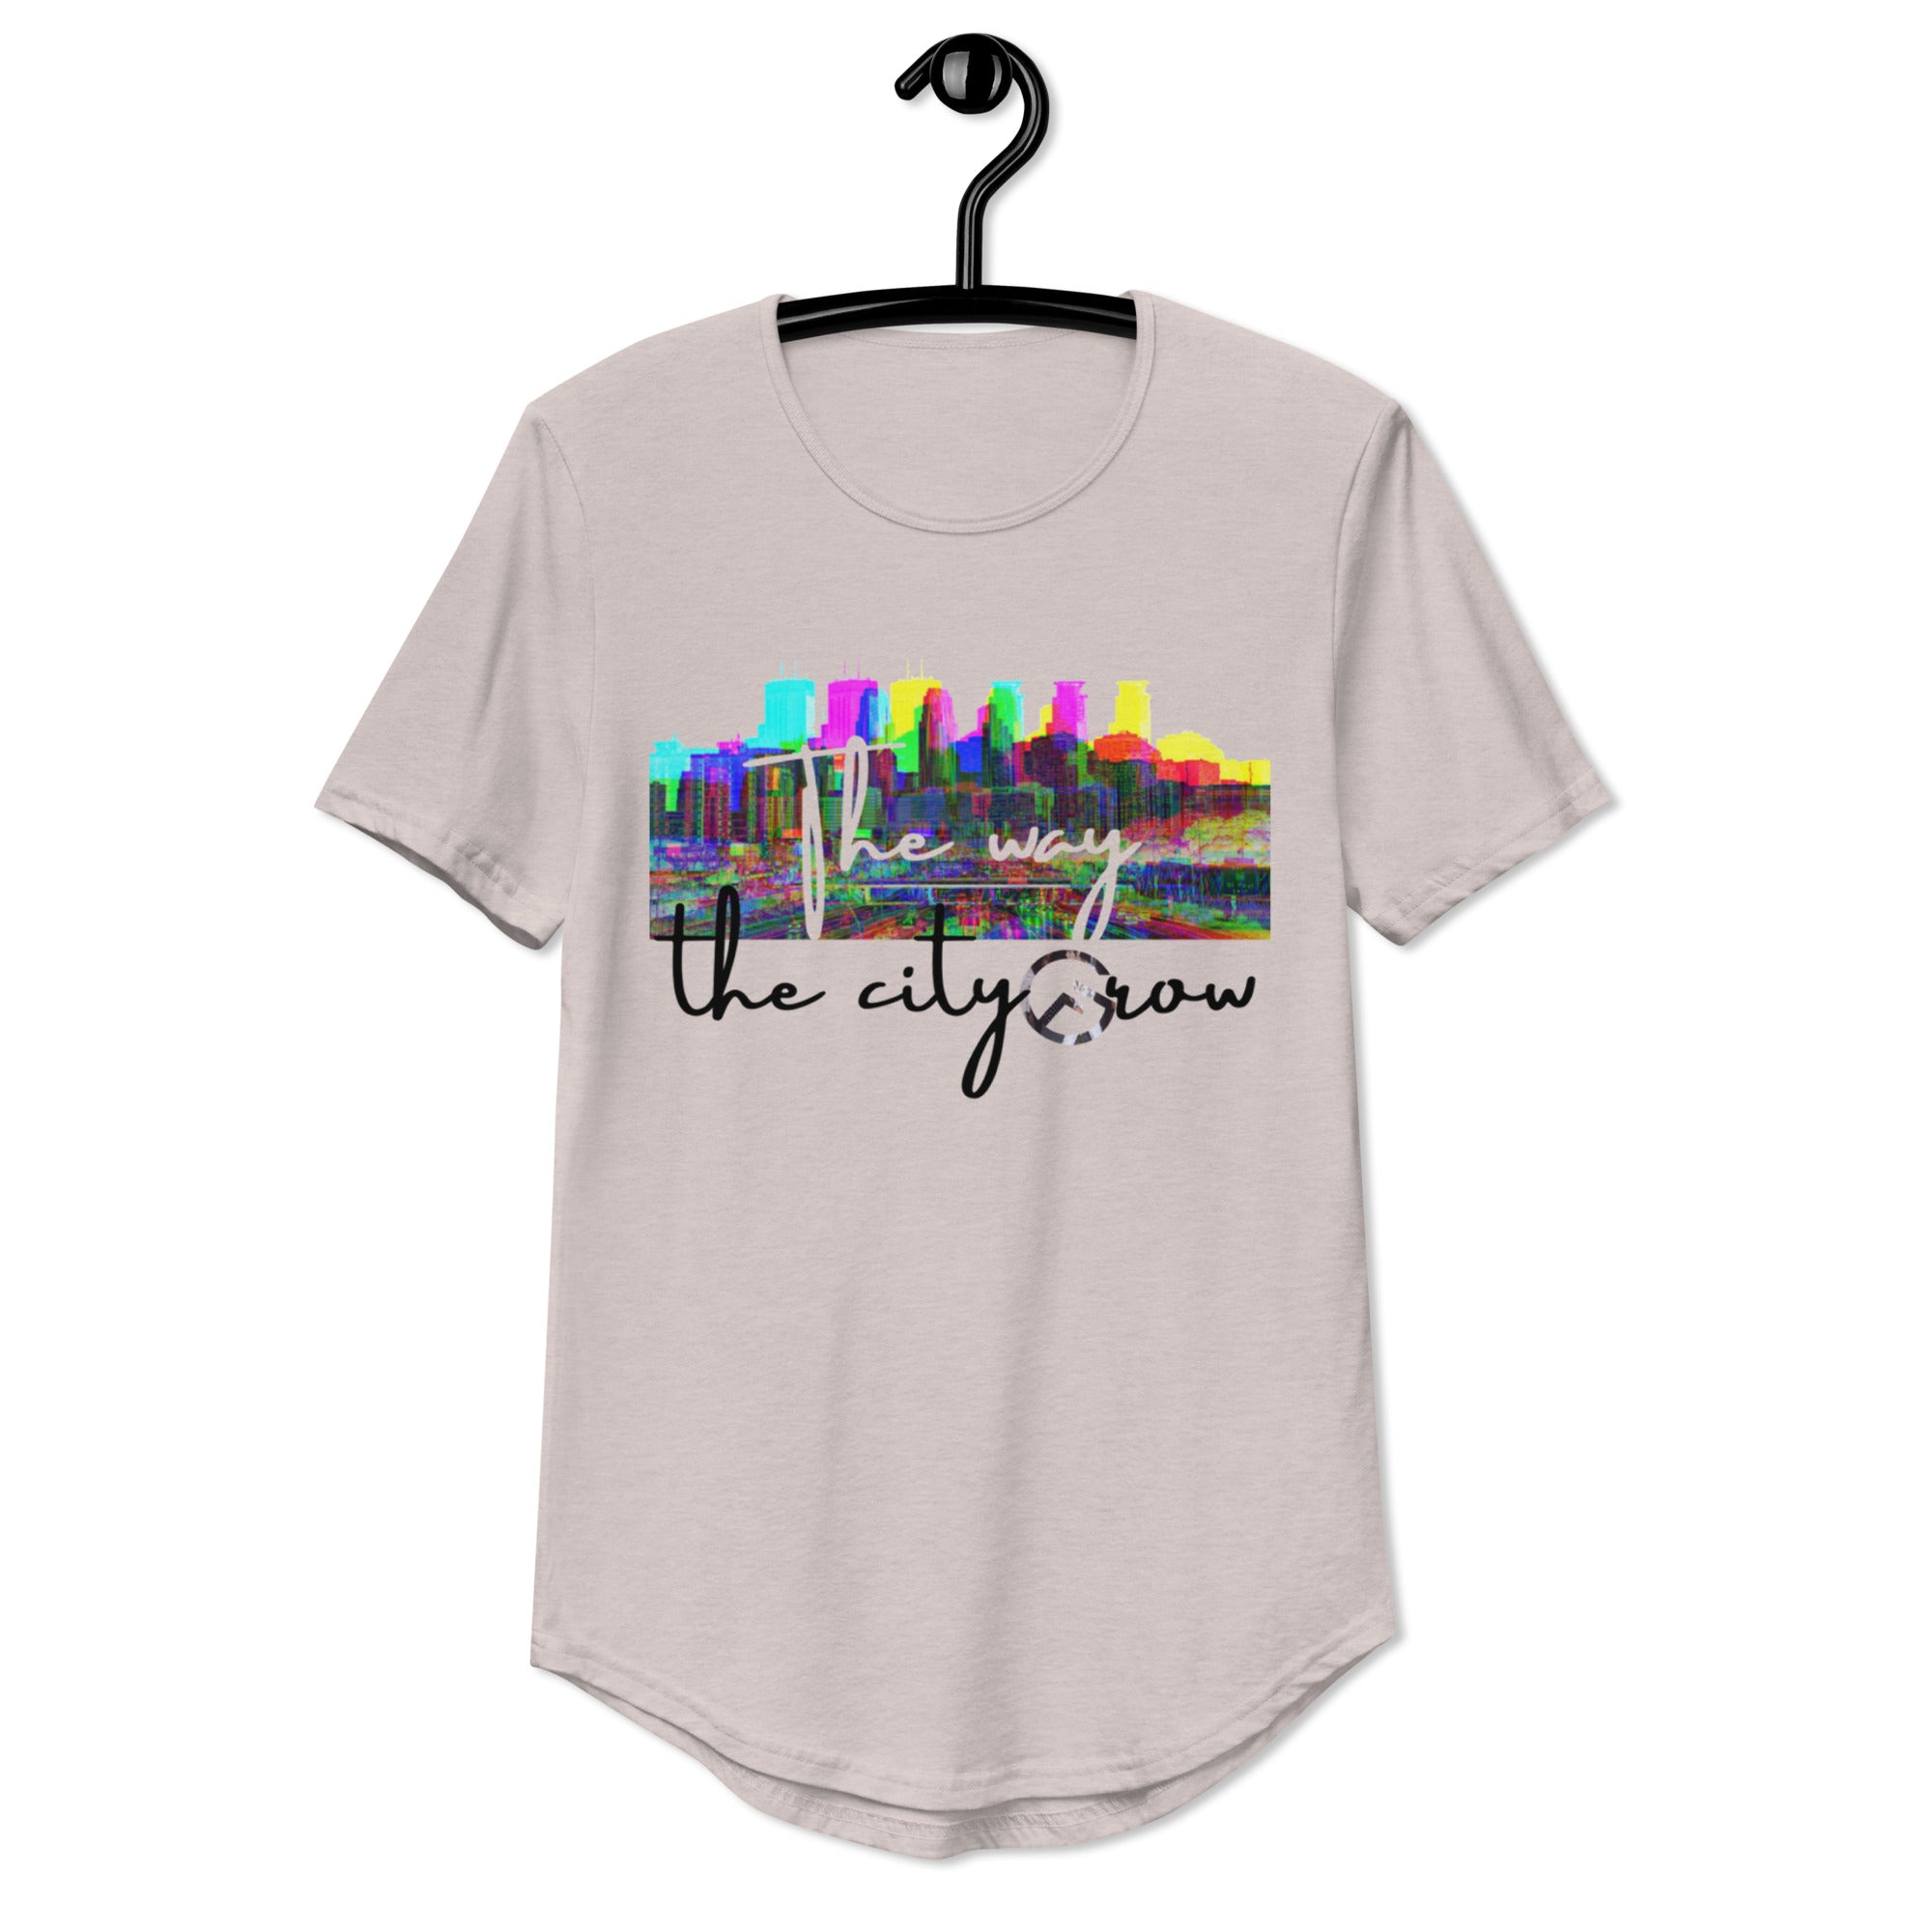 Love of the city - Men's Curved Hem T-Shirt